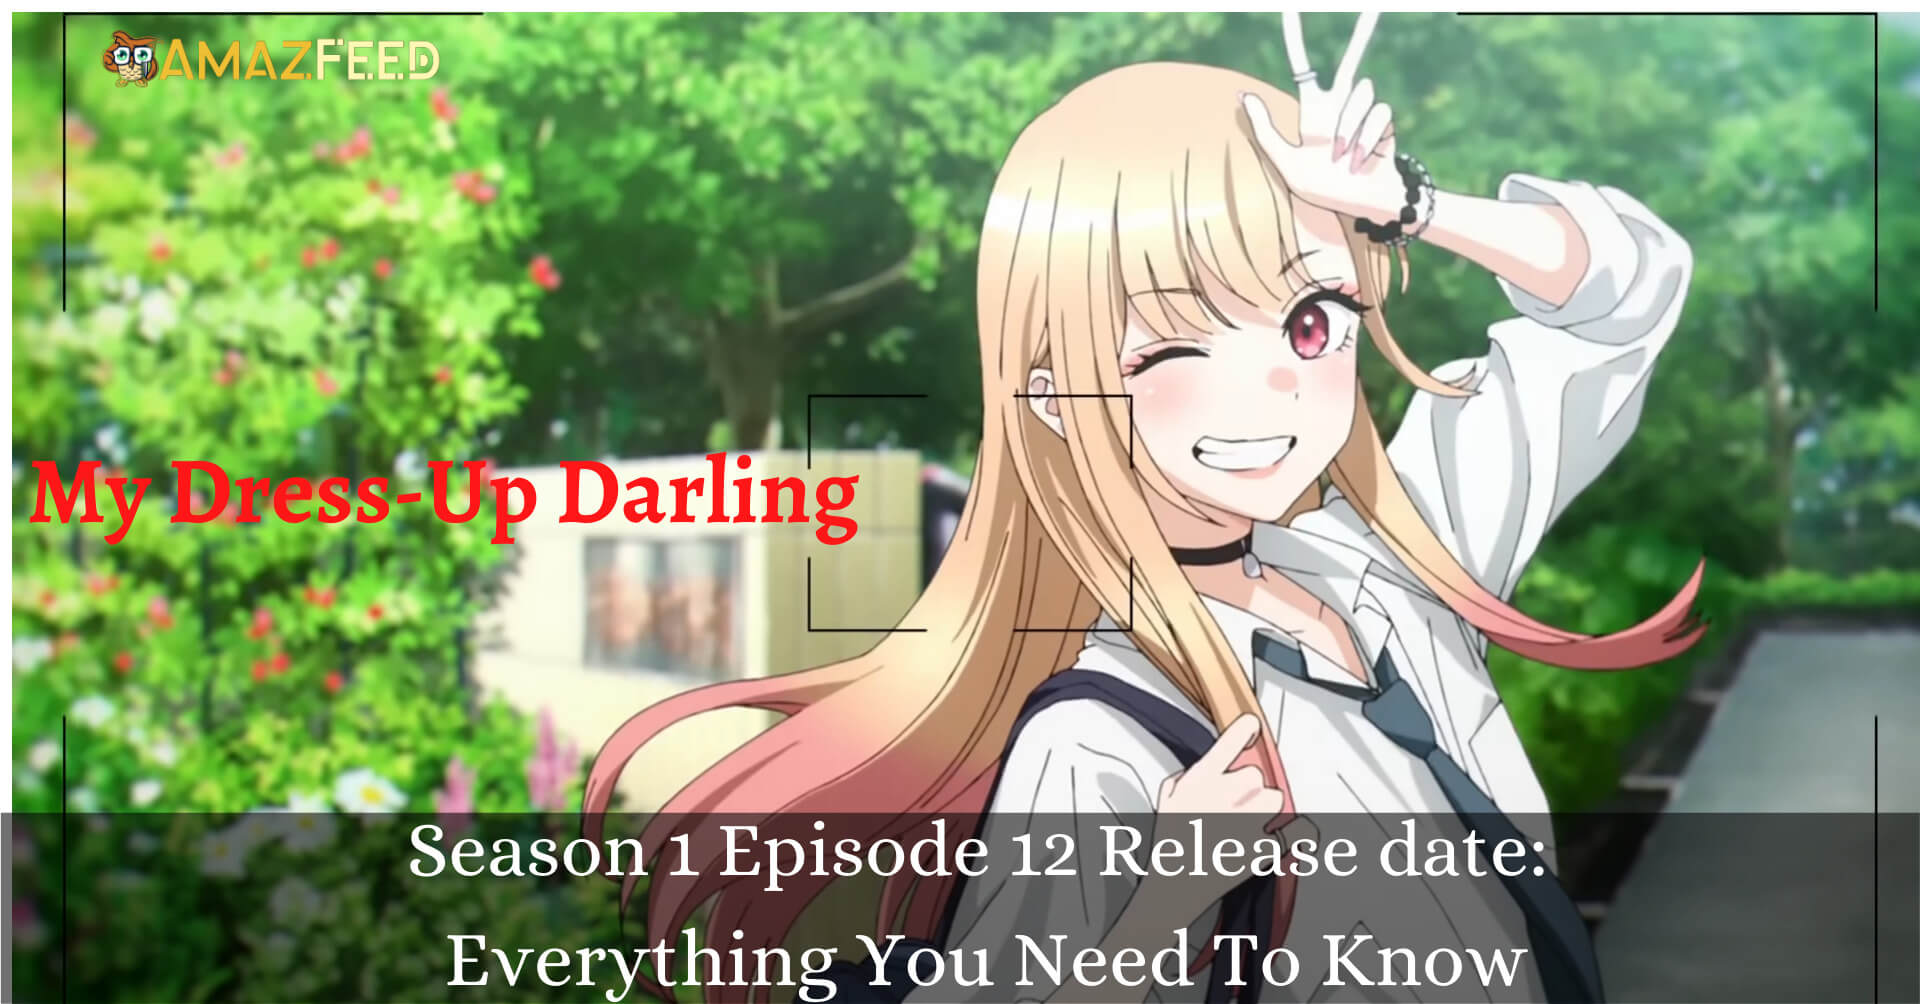 My Dress-Up Darling Season 1 Episode 12 Release date